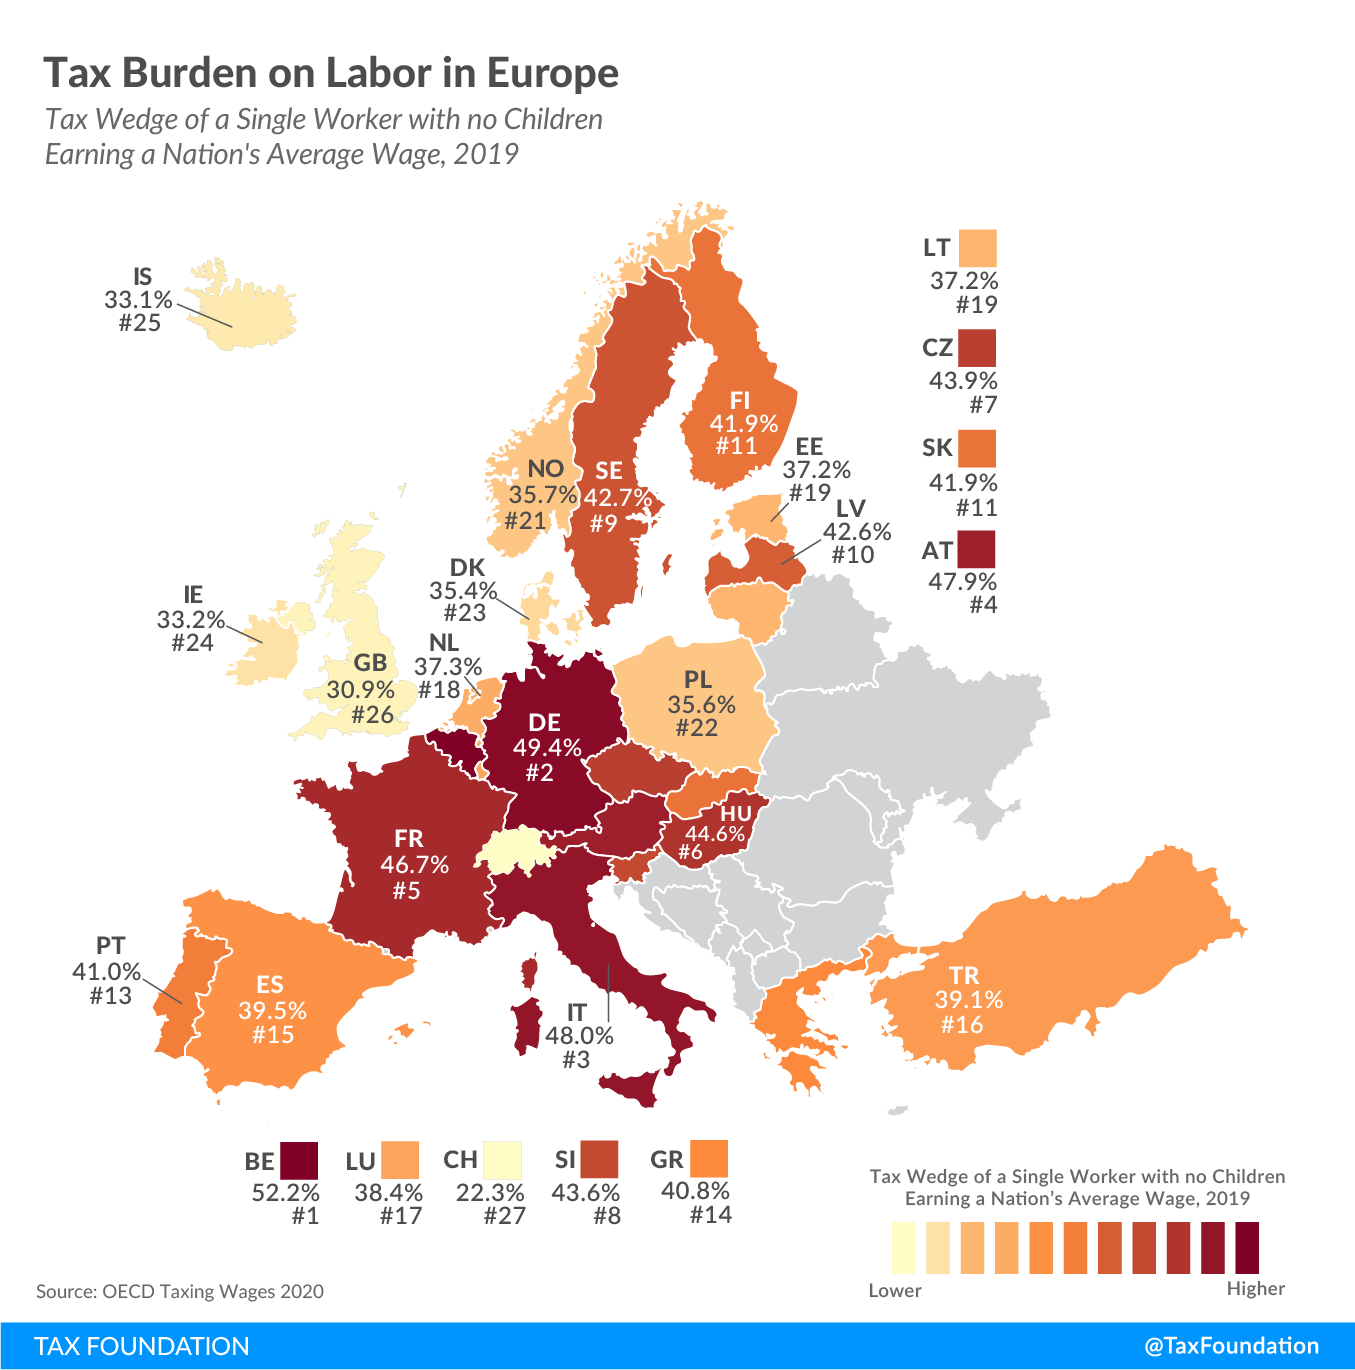 Tax burden on labor in Europe tax burden on labor, Europe tax wedge of a single worker